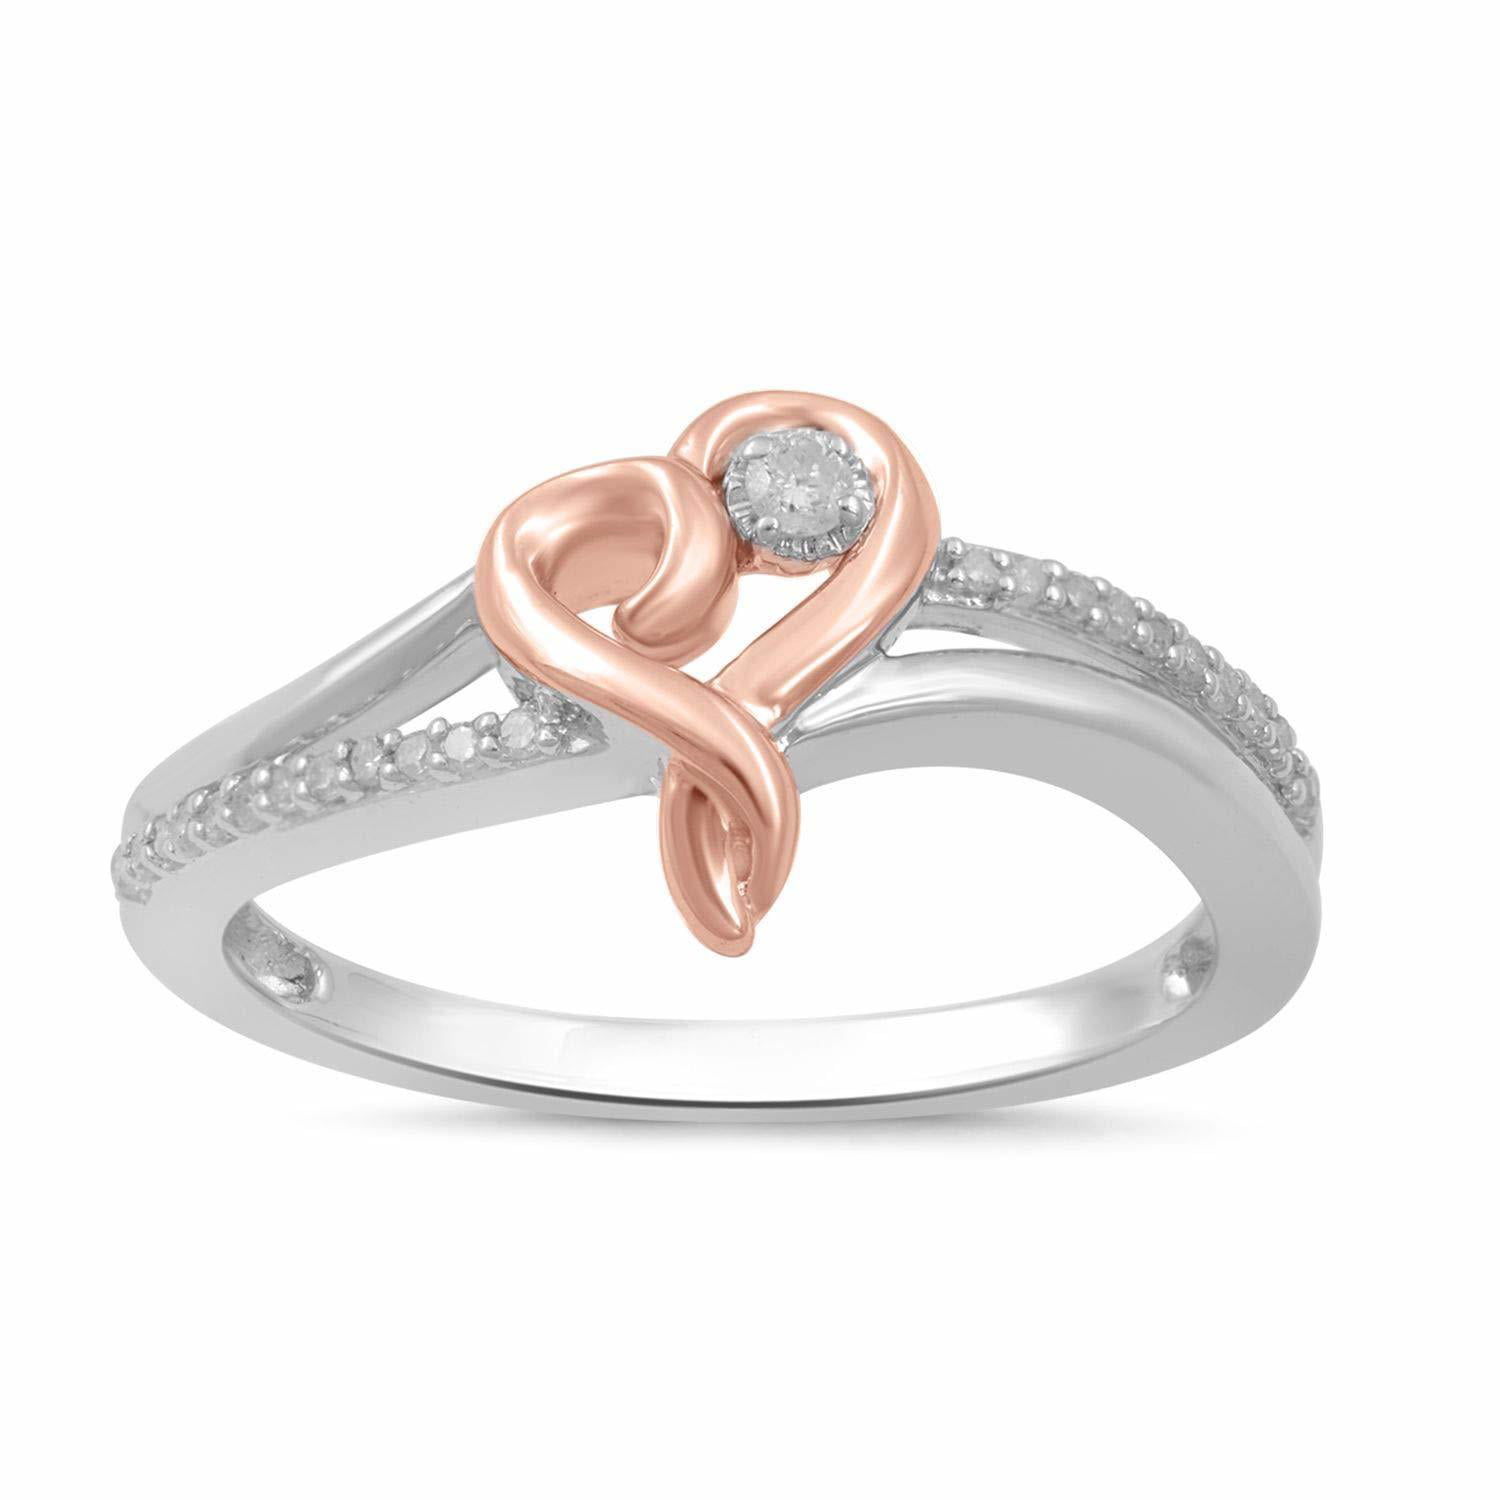 Heart Shaped Diamond ringheart shaped pink valentine ringVivid Pink Diamond Engagement Ringgift for girlfriendbirth day gift for lover.